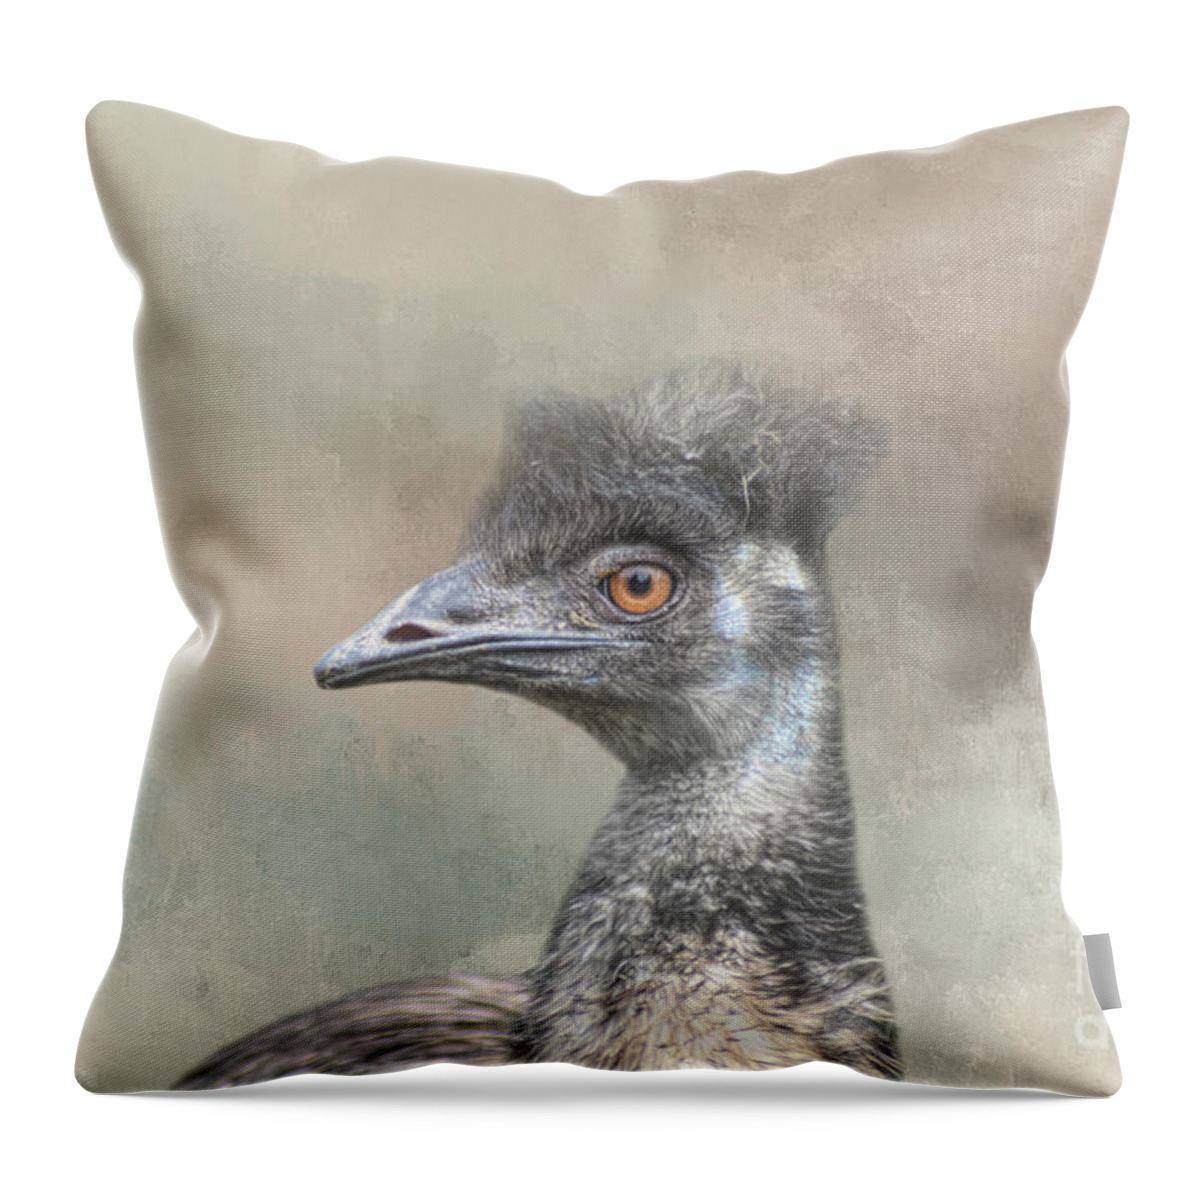 Emu Throw Pillow featuring the photograph Emu Portrait 02 by Elisabeth Lucas